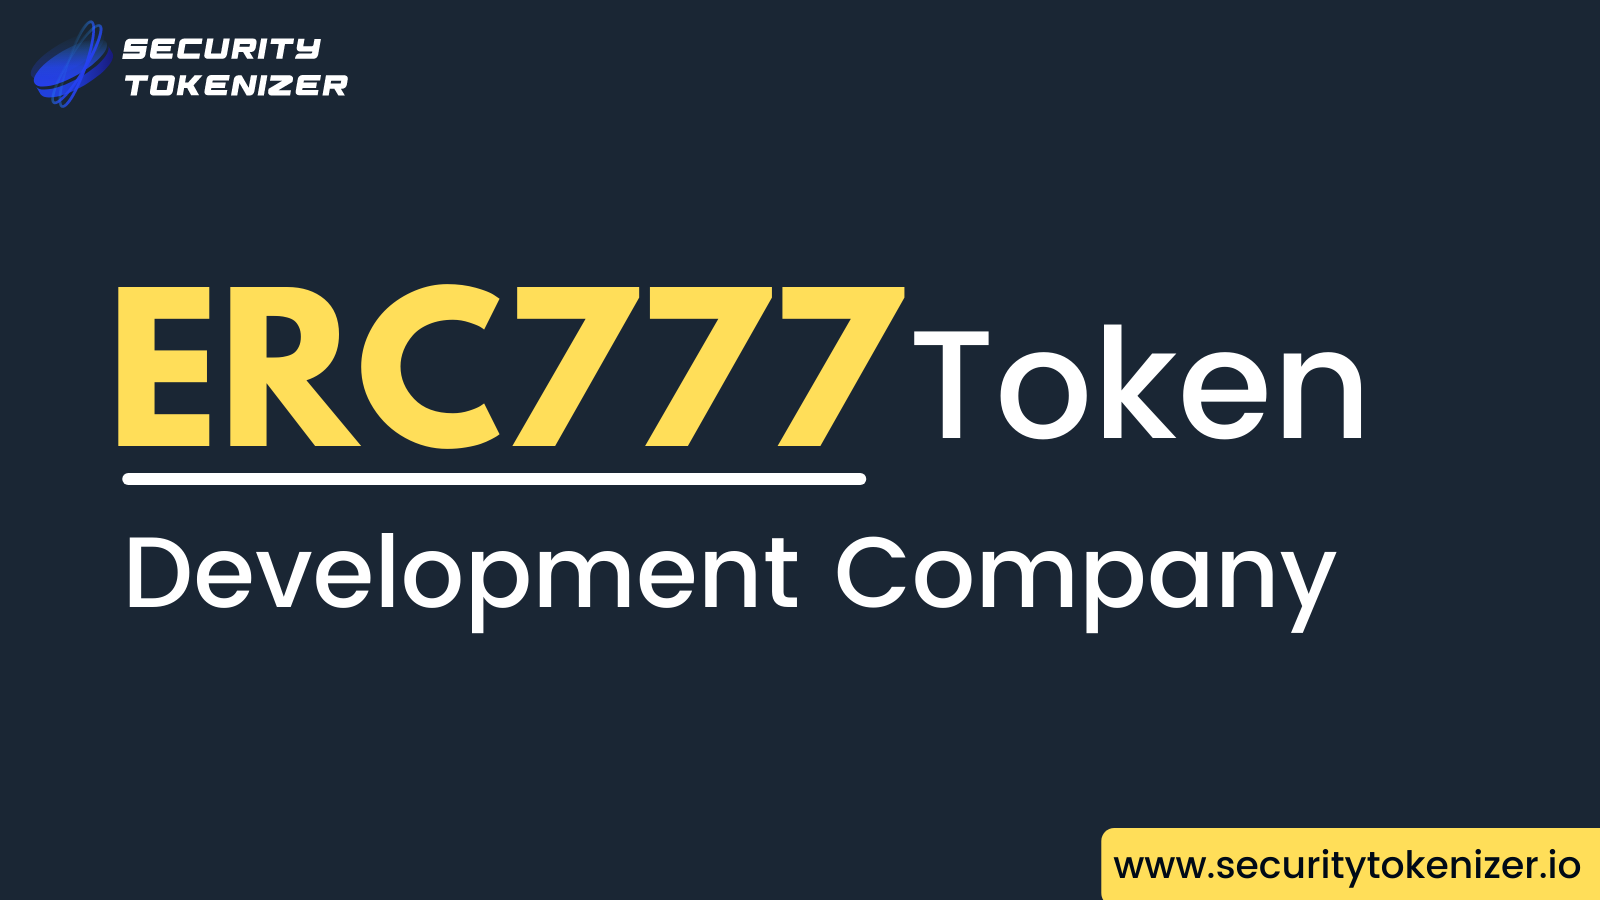 ERC777 Token Development Company